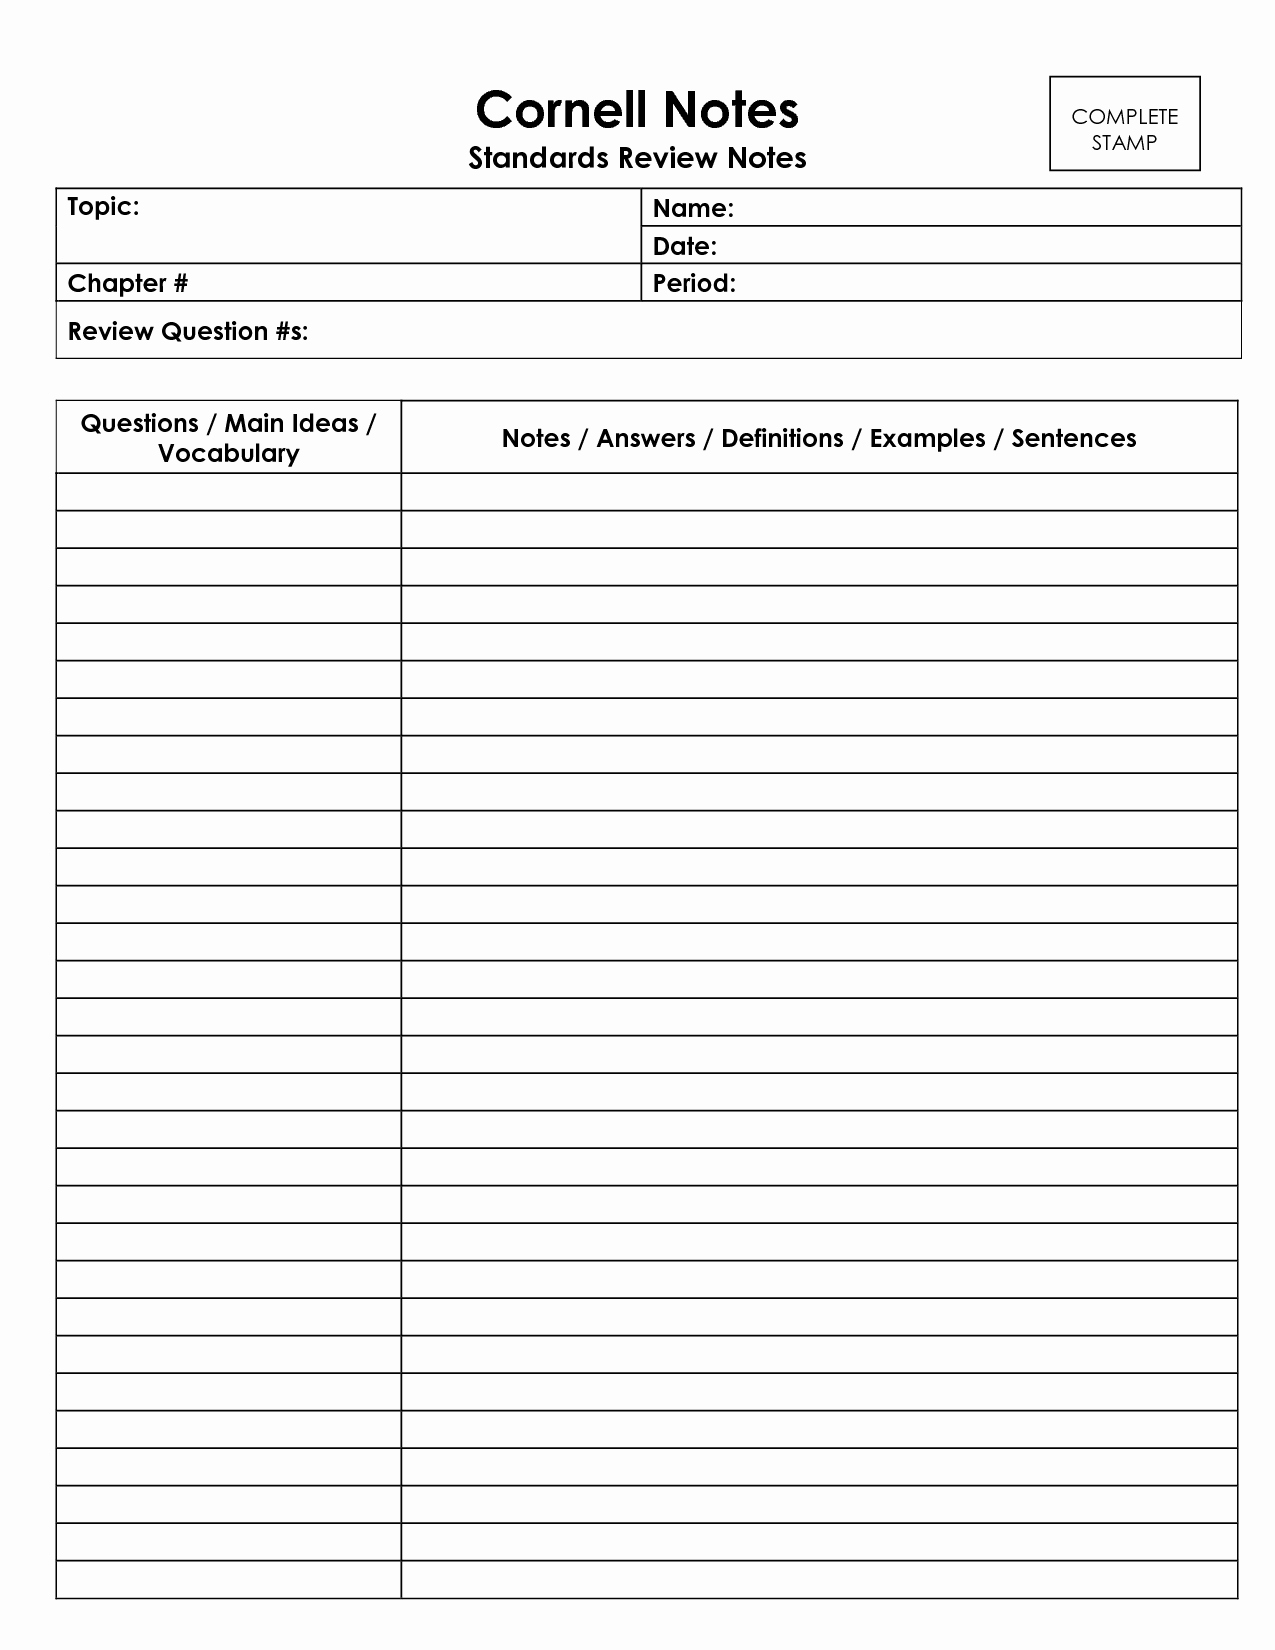 Avid Cornell Note Template Elegant Cornell Notes Template Doc Cornell Notes Template Word